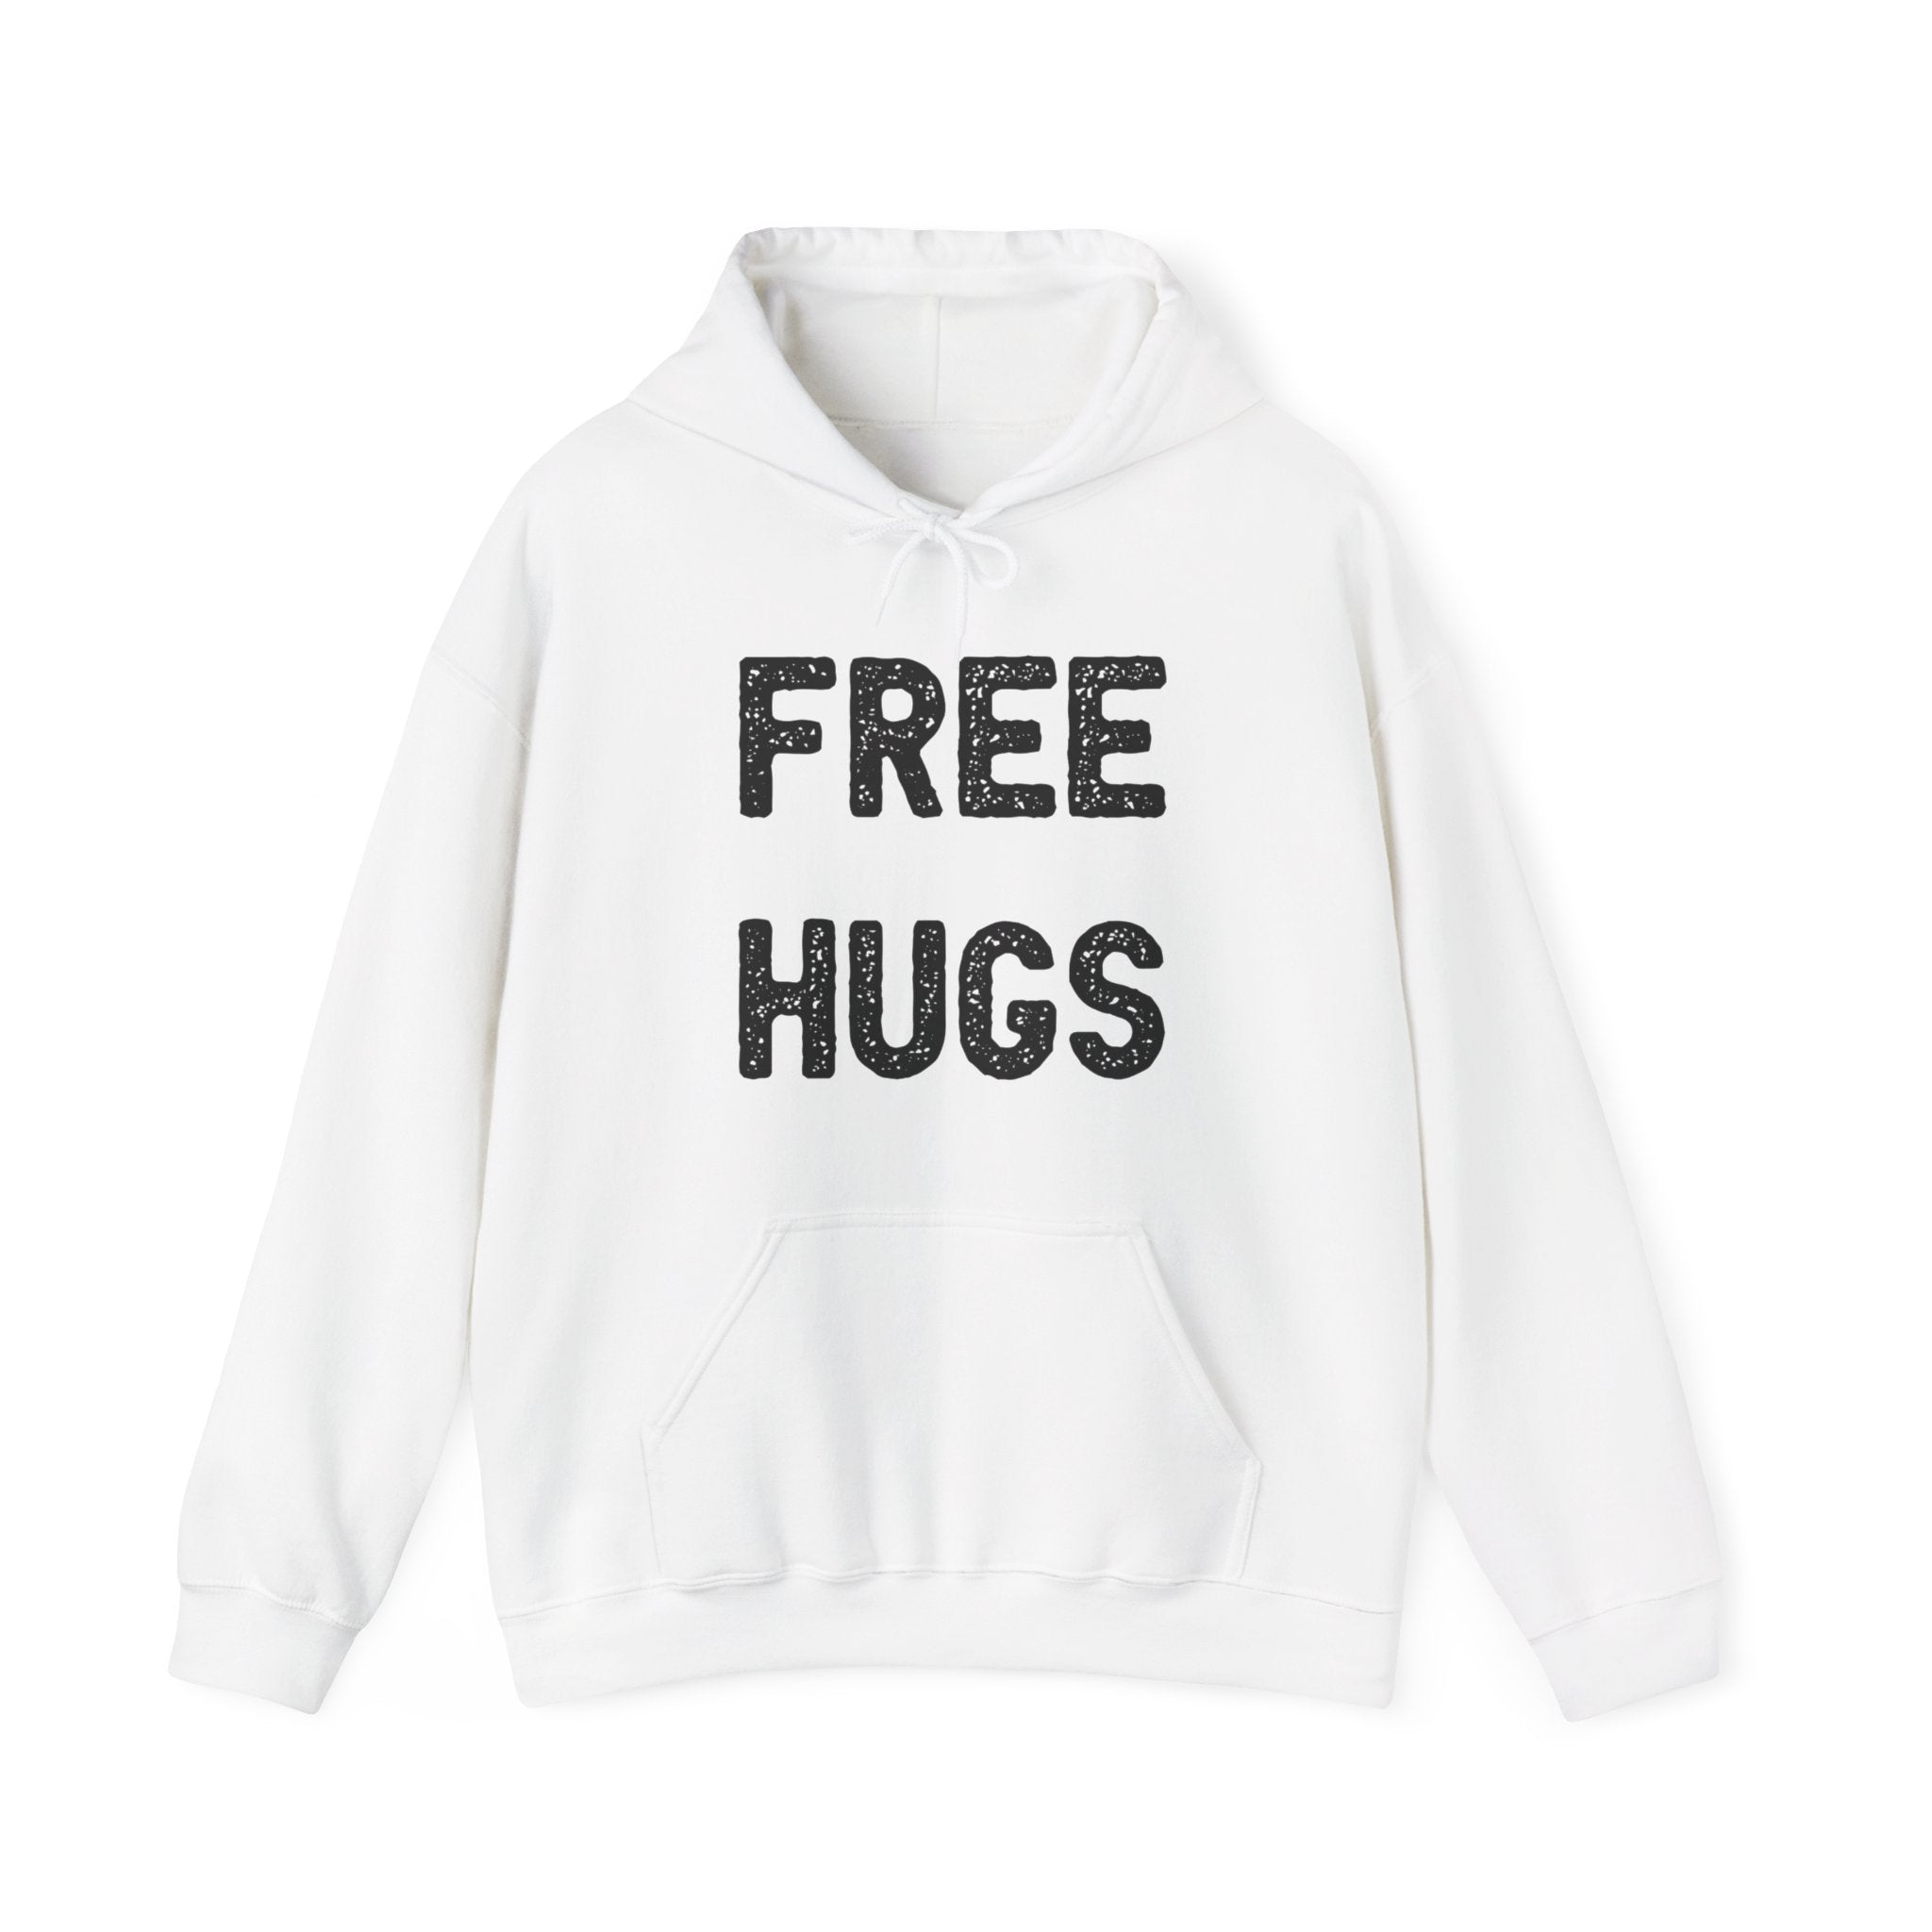 FREE HUGS - Hooded Sweatshirt